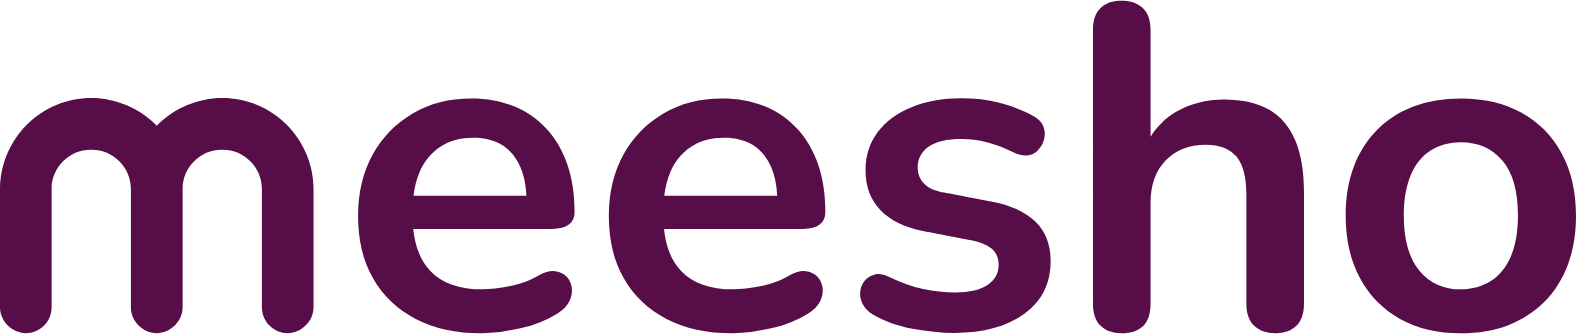 Meesho logo large (transparent PNG)